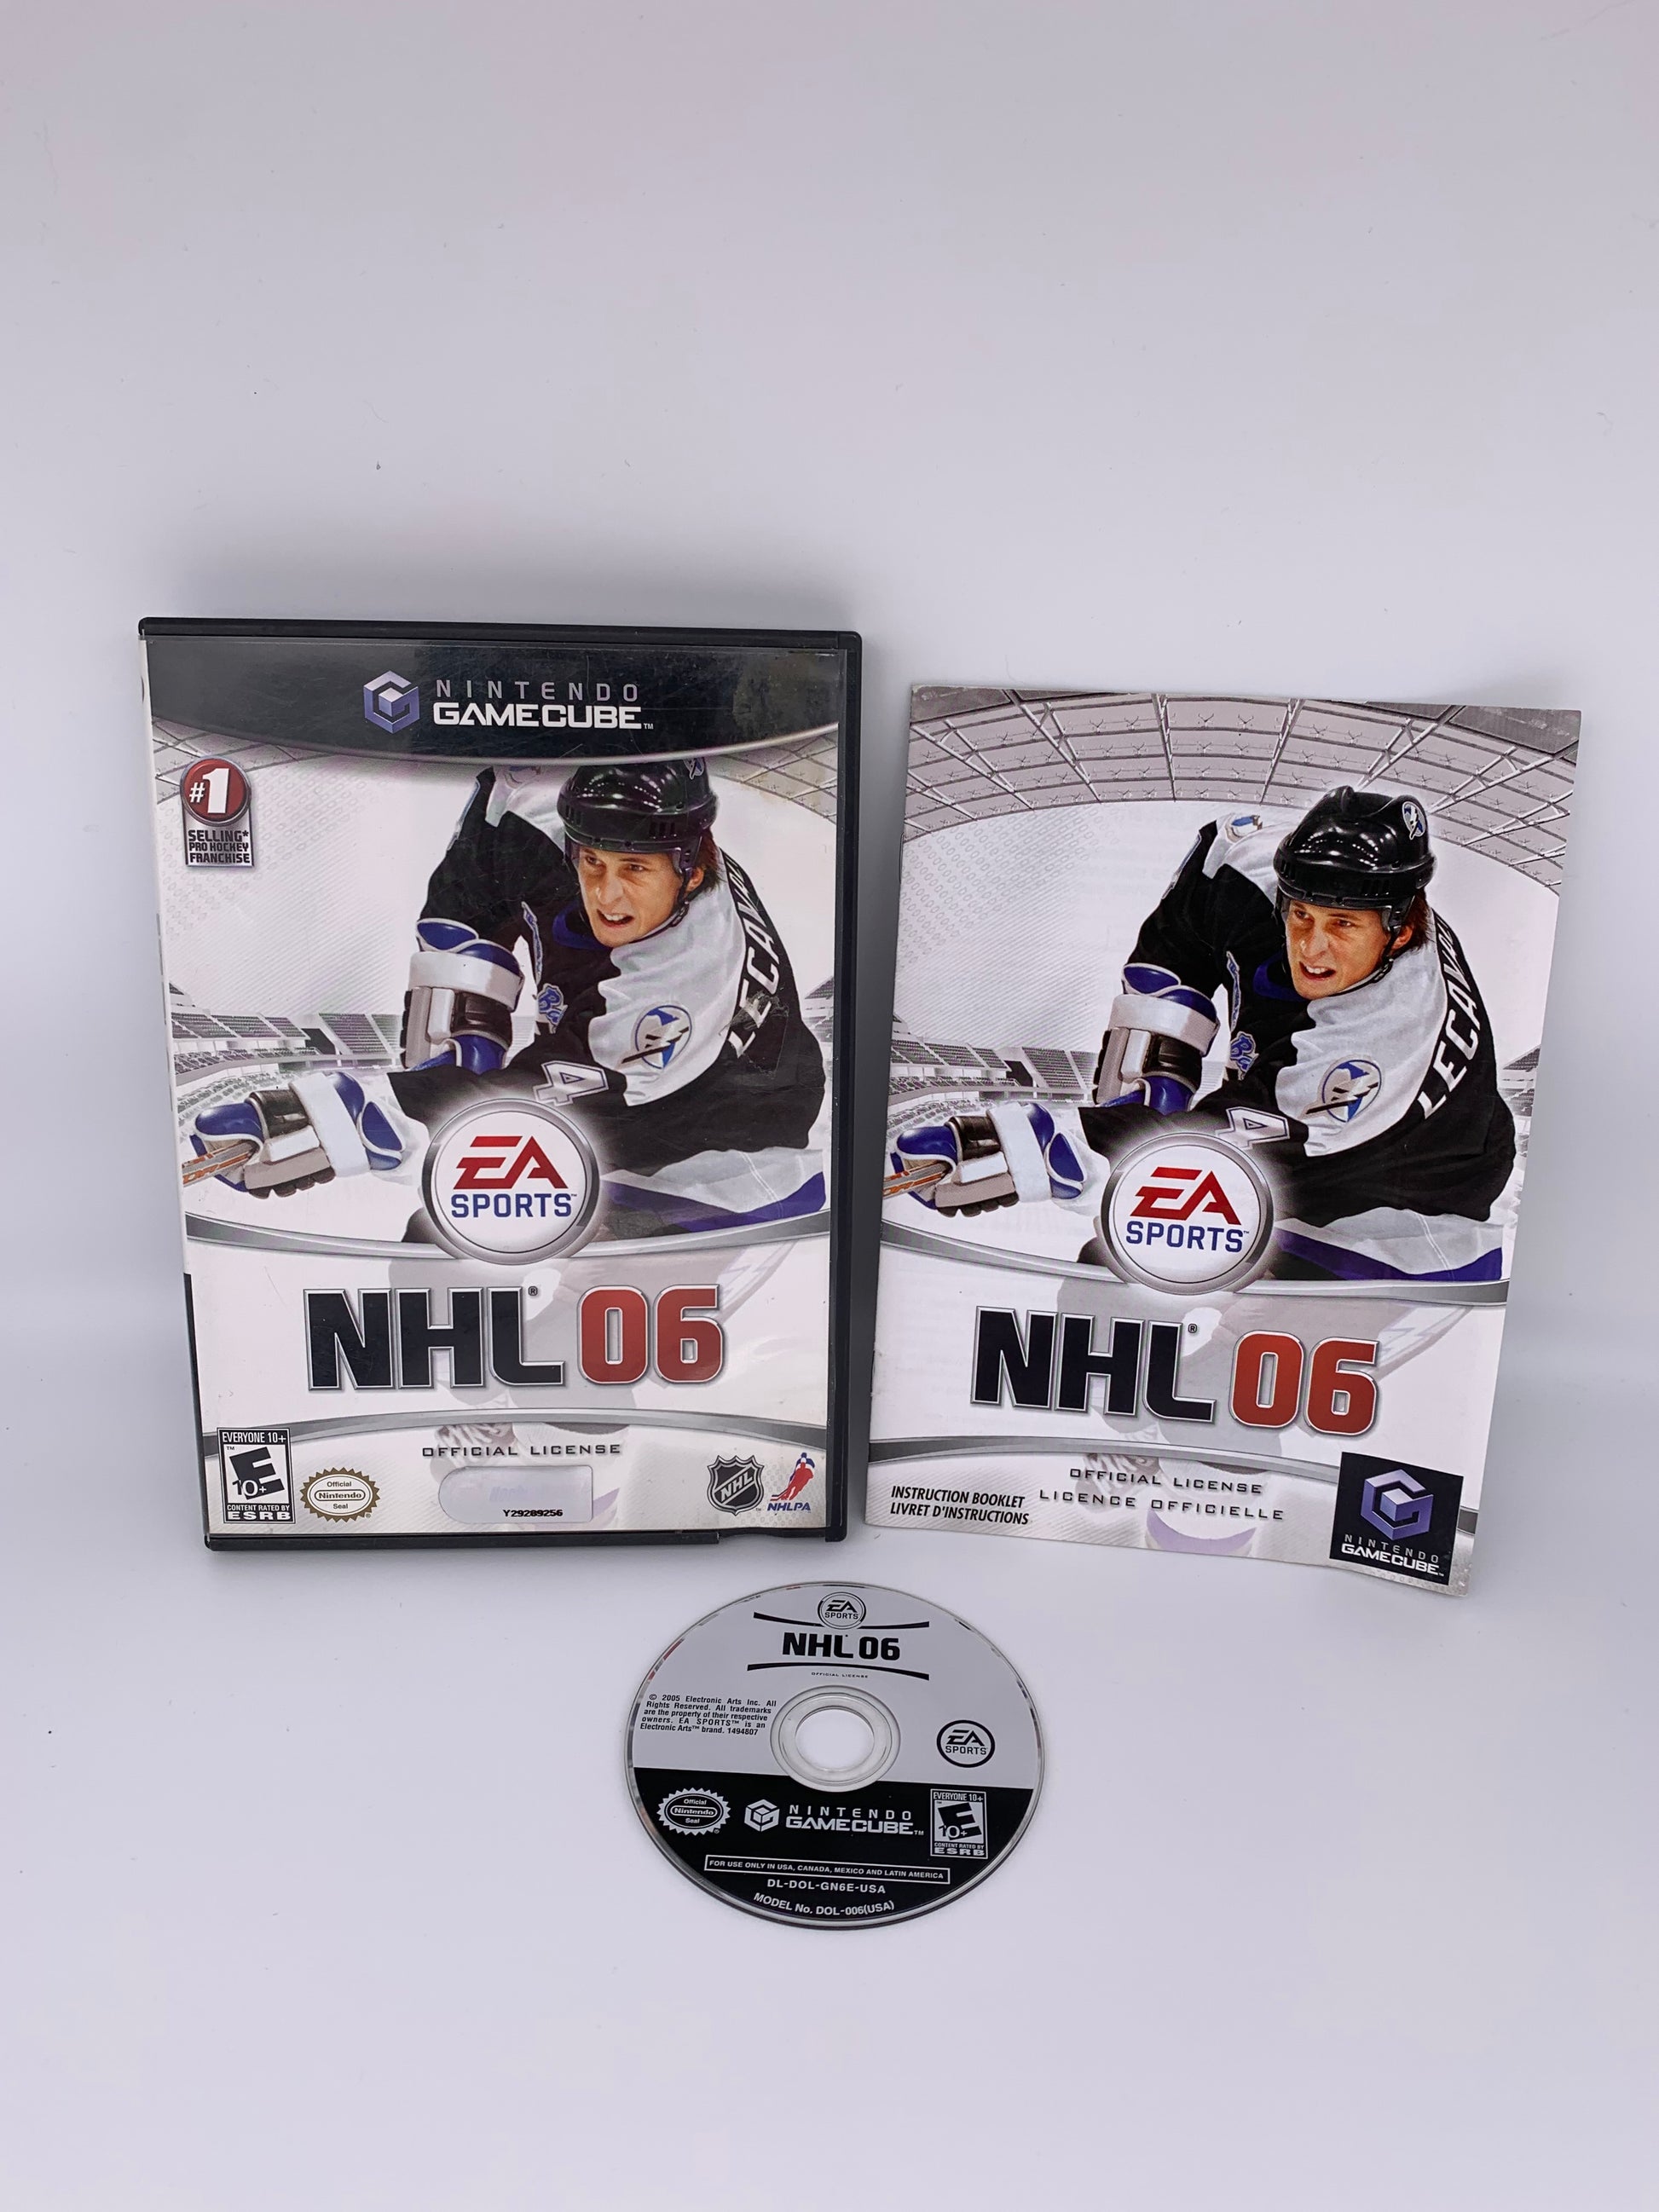 PiXEL-RETRO.COM : NINTENDO GAMECUBE COMPLETE CIB BOX MANUAL GAME NTSC NHL 06